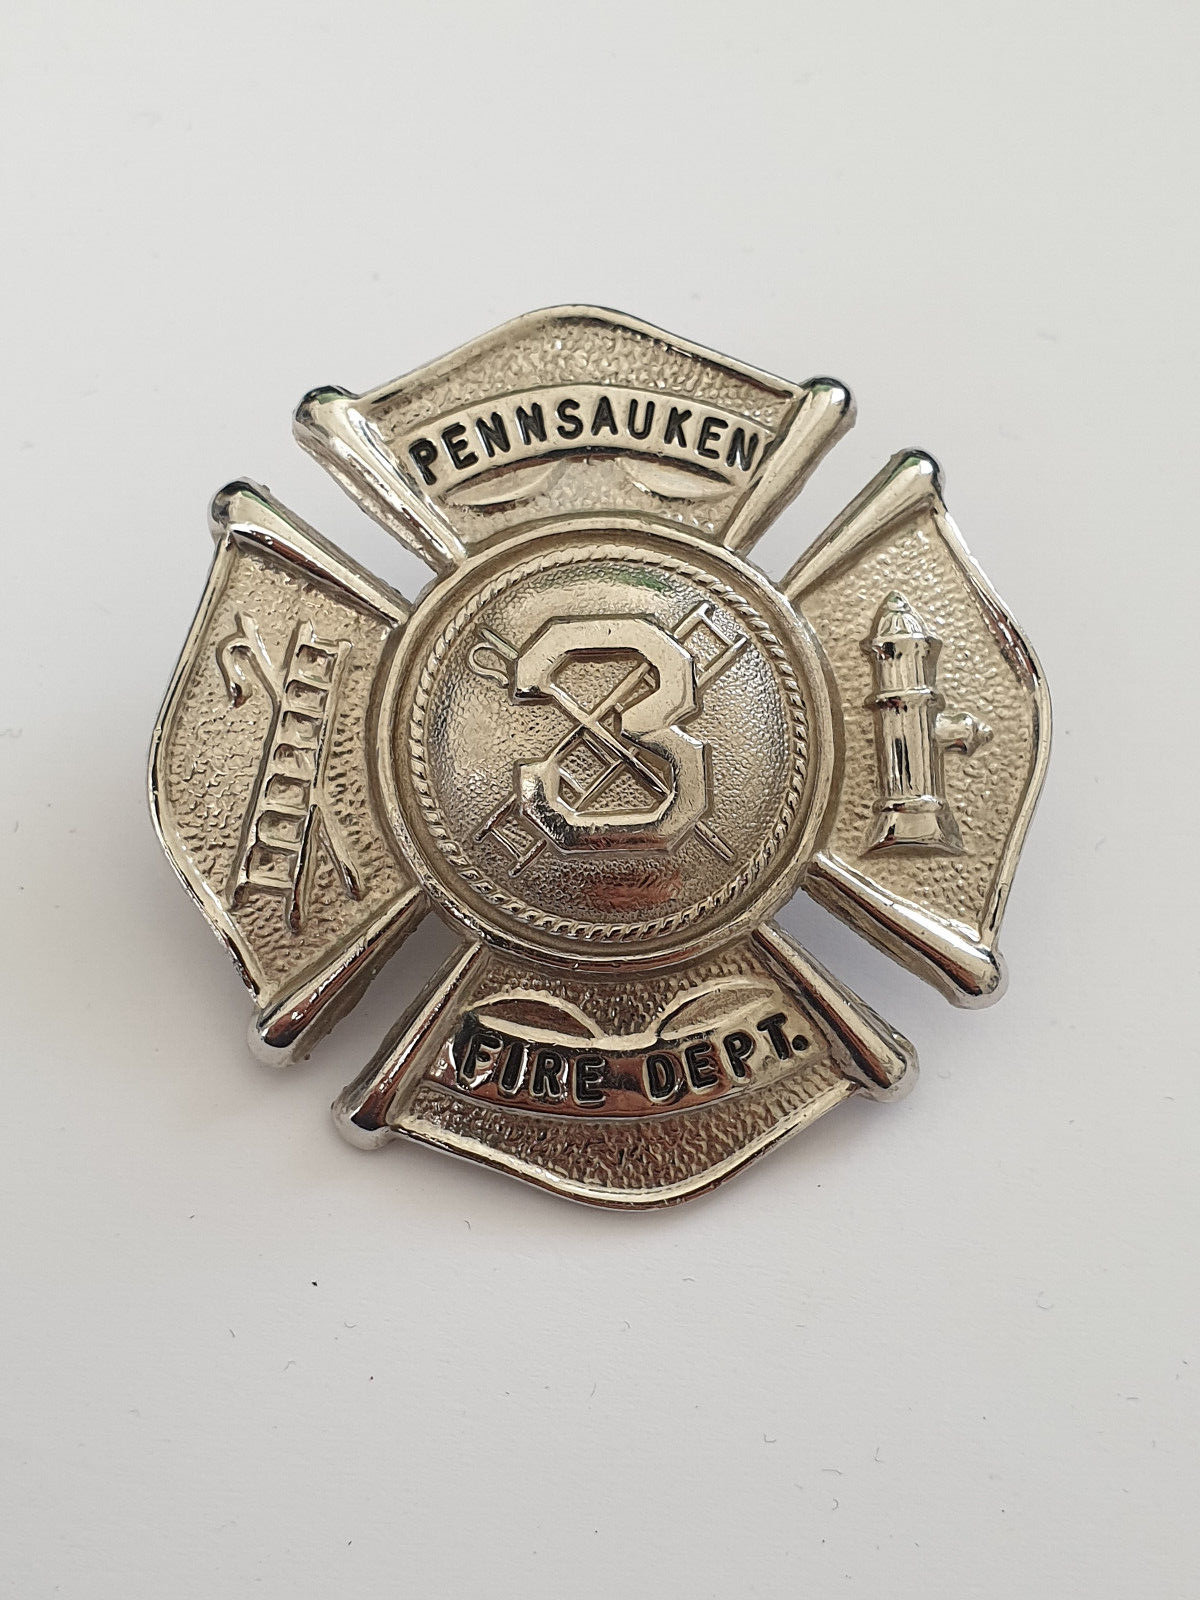 Pennsauken badge, Vintage USA badge